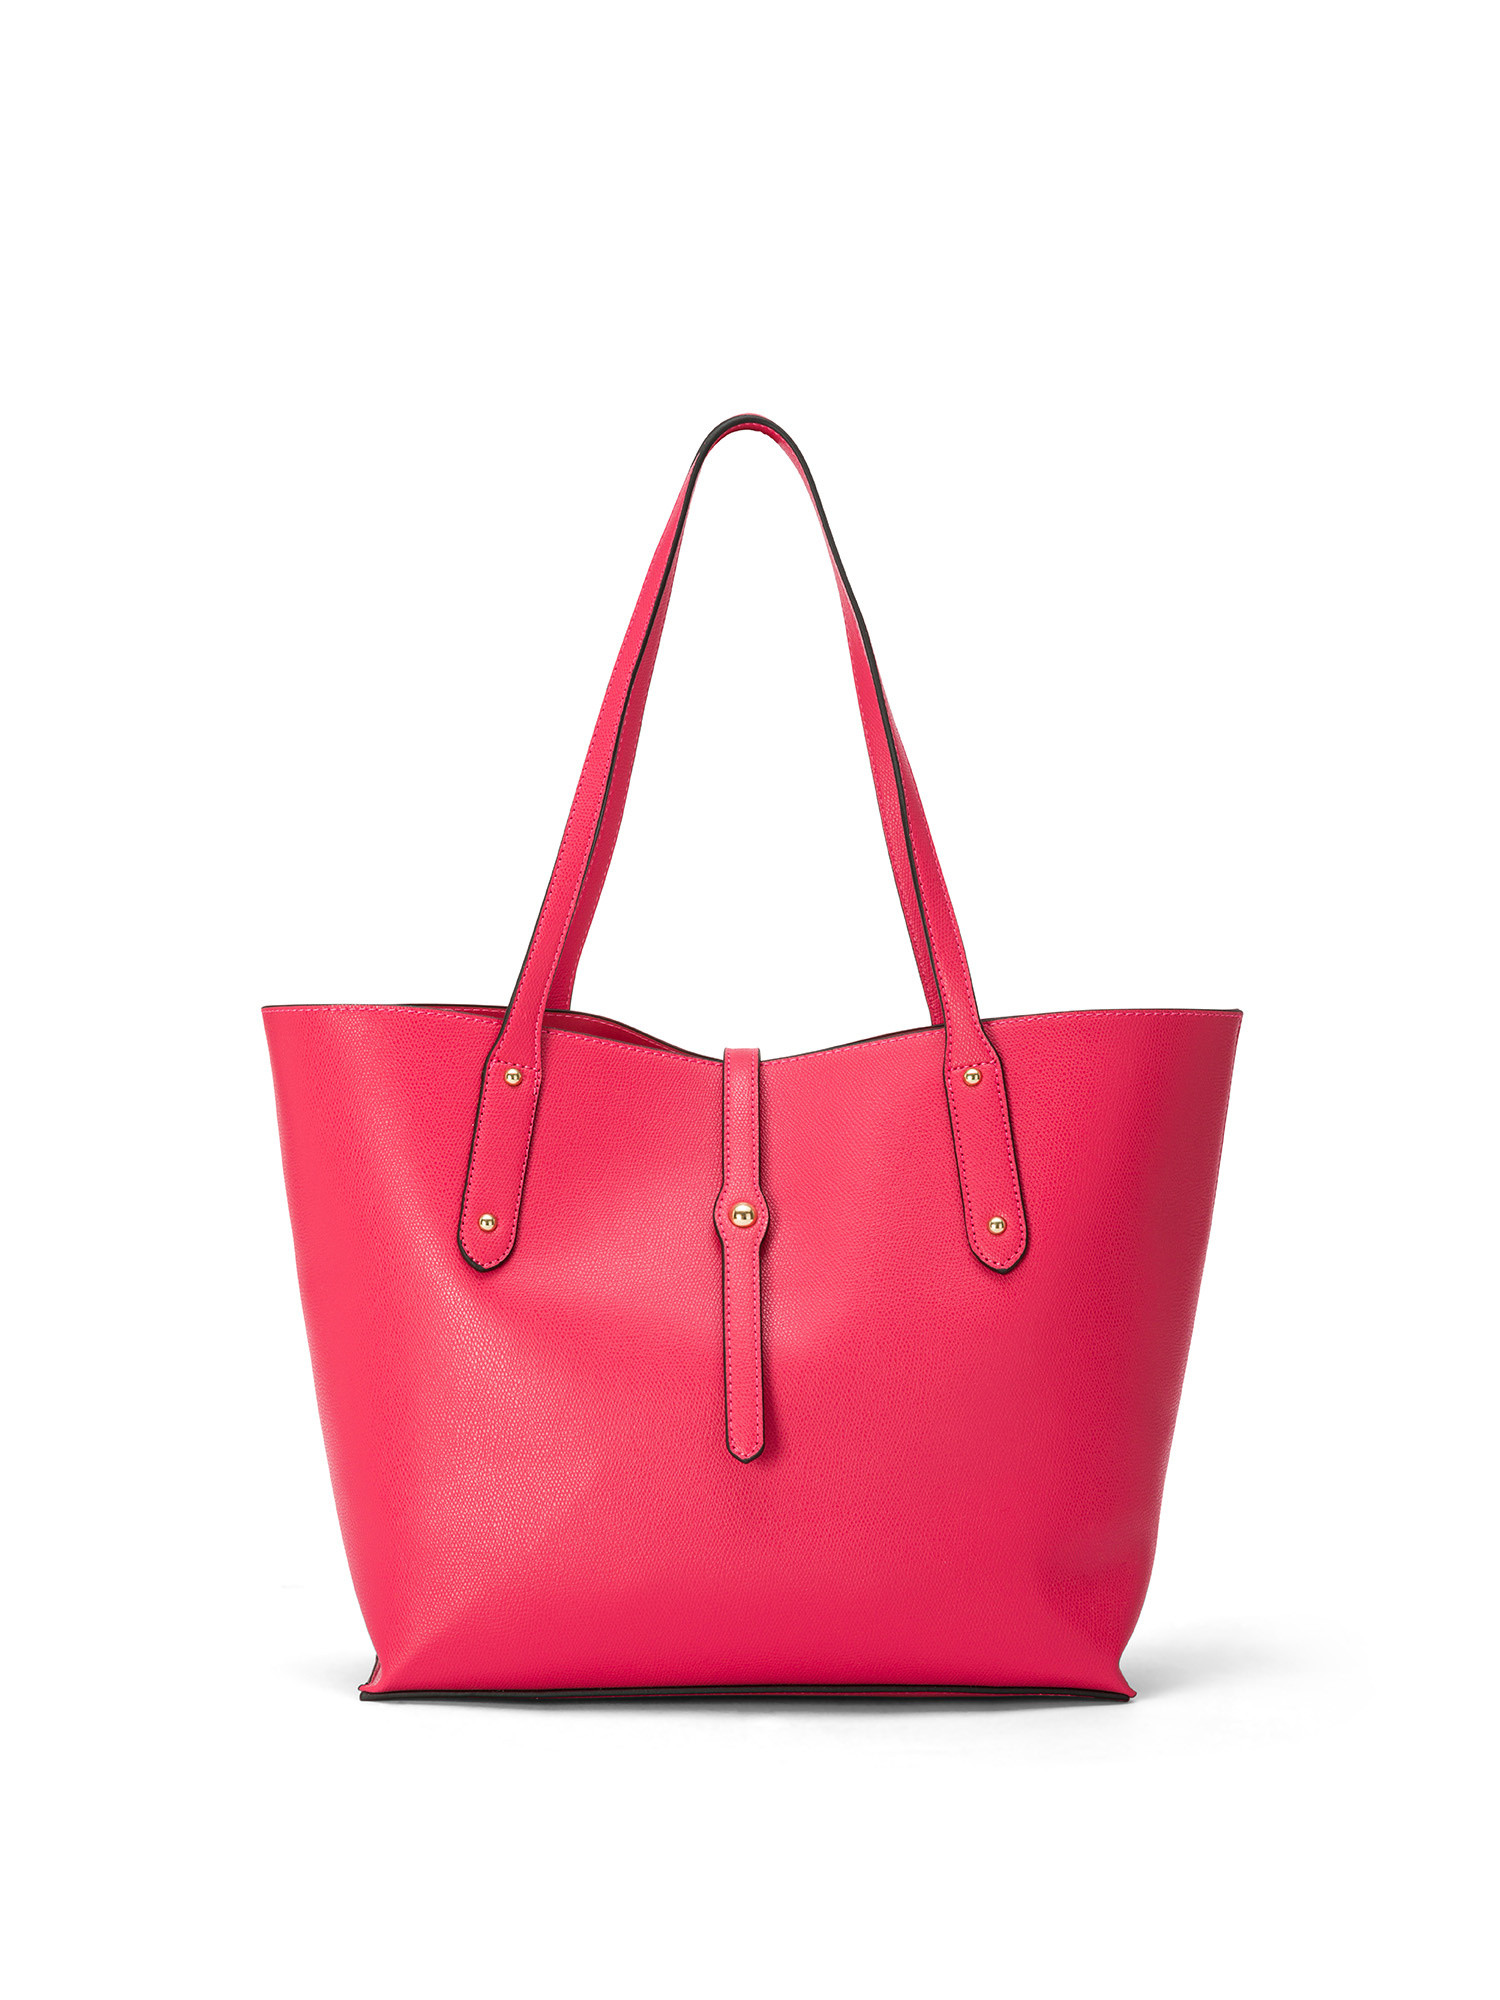 Koan - Shopping bag, Rosa fuxia, large image number 0